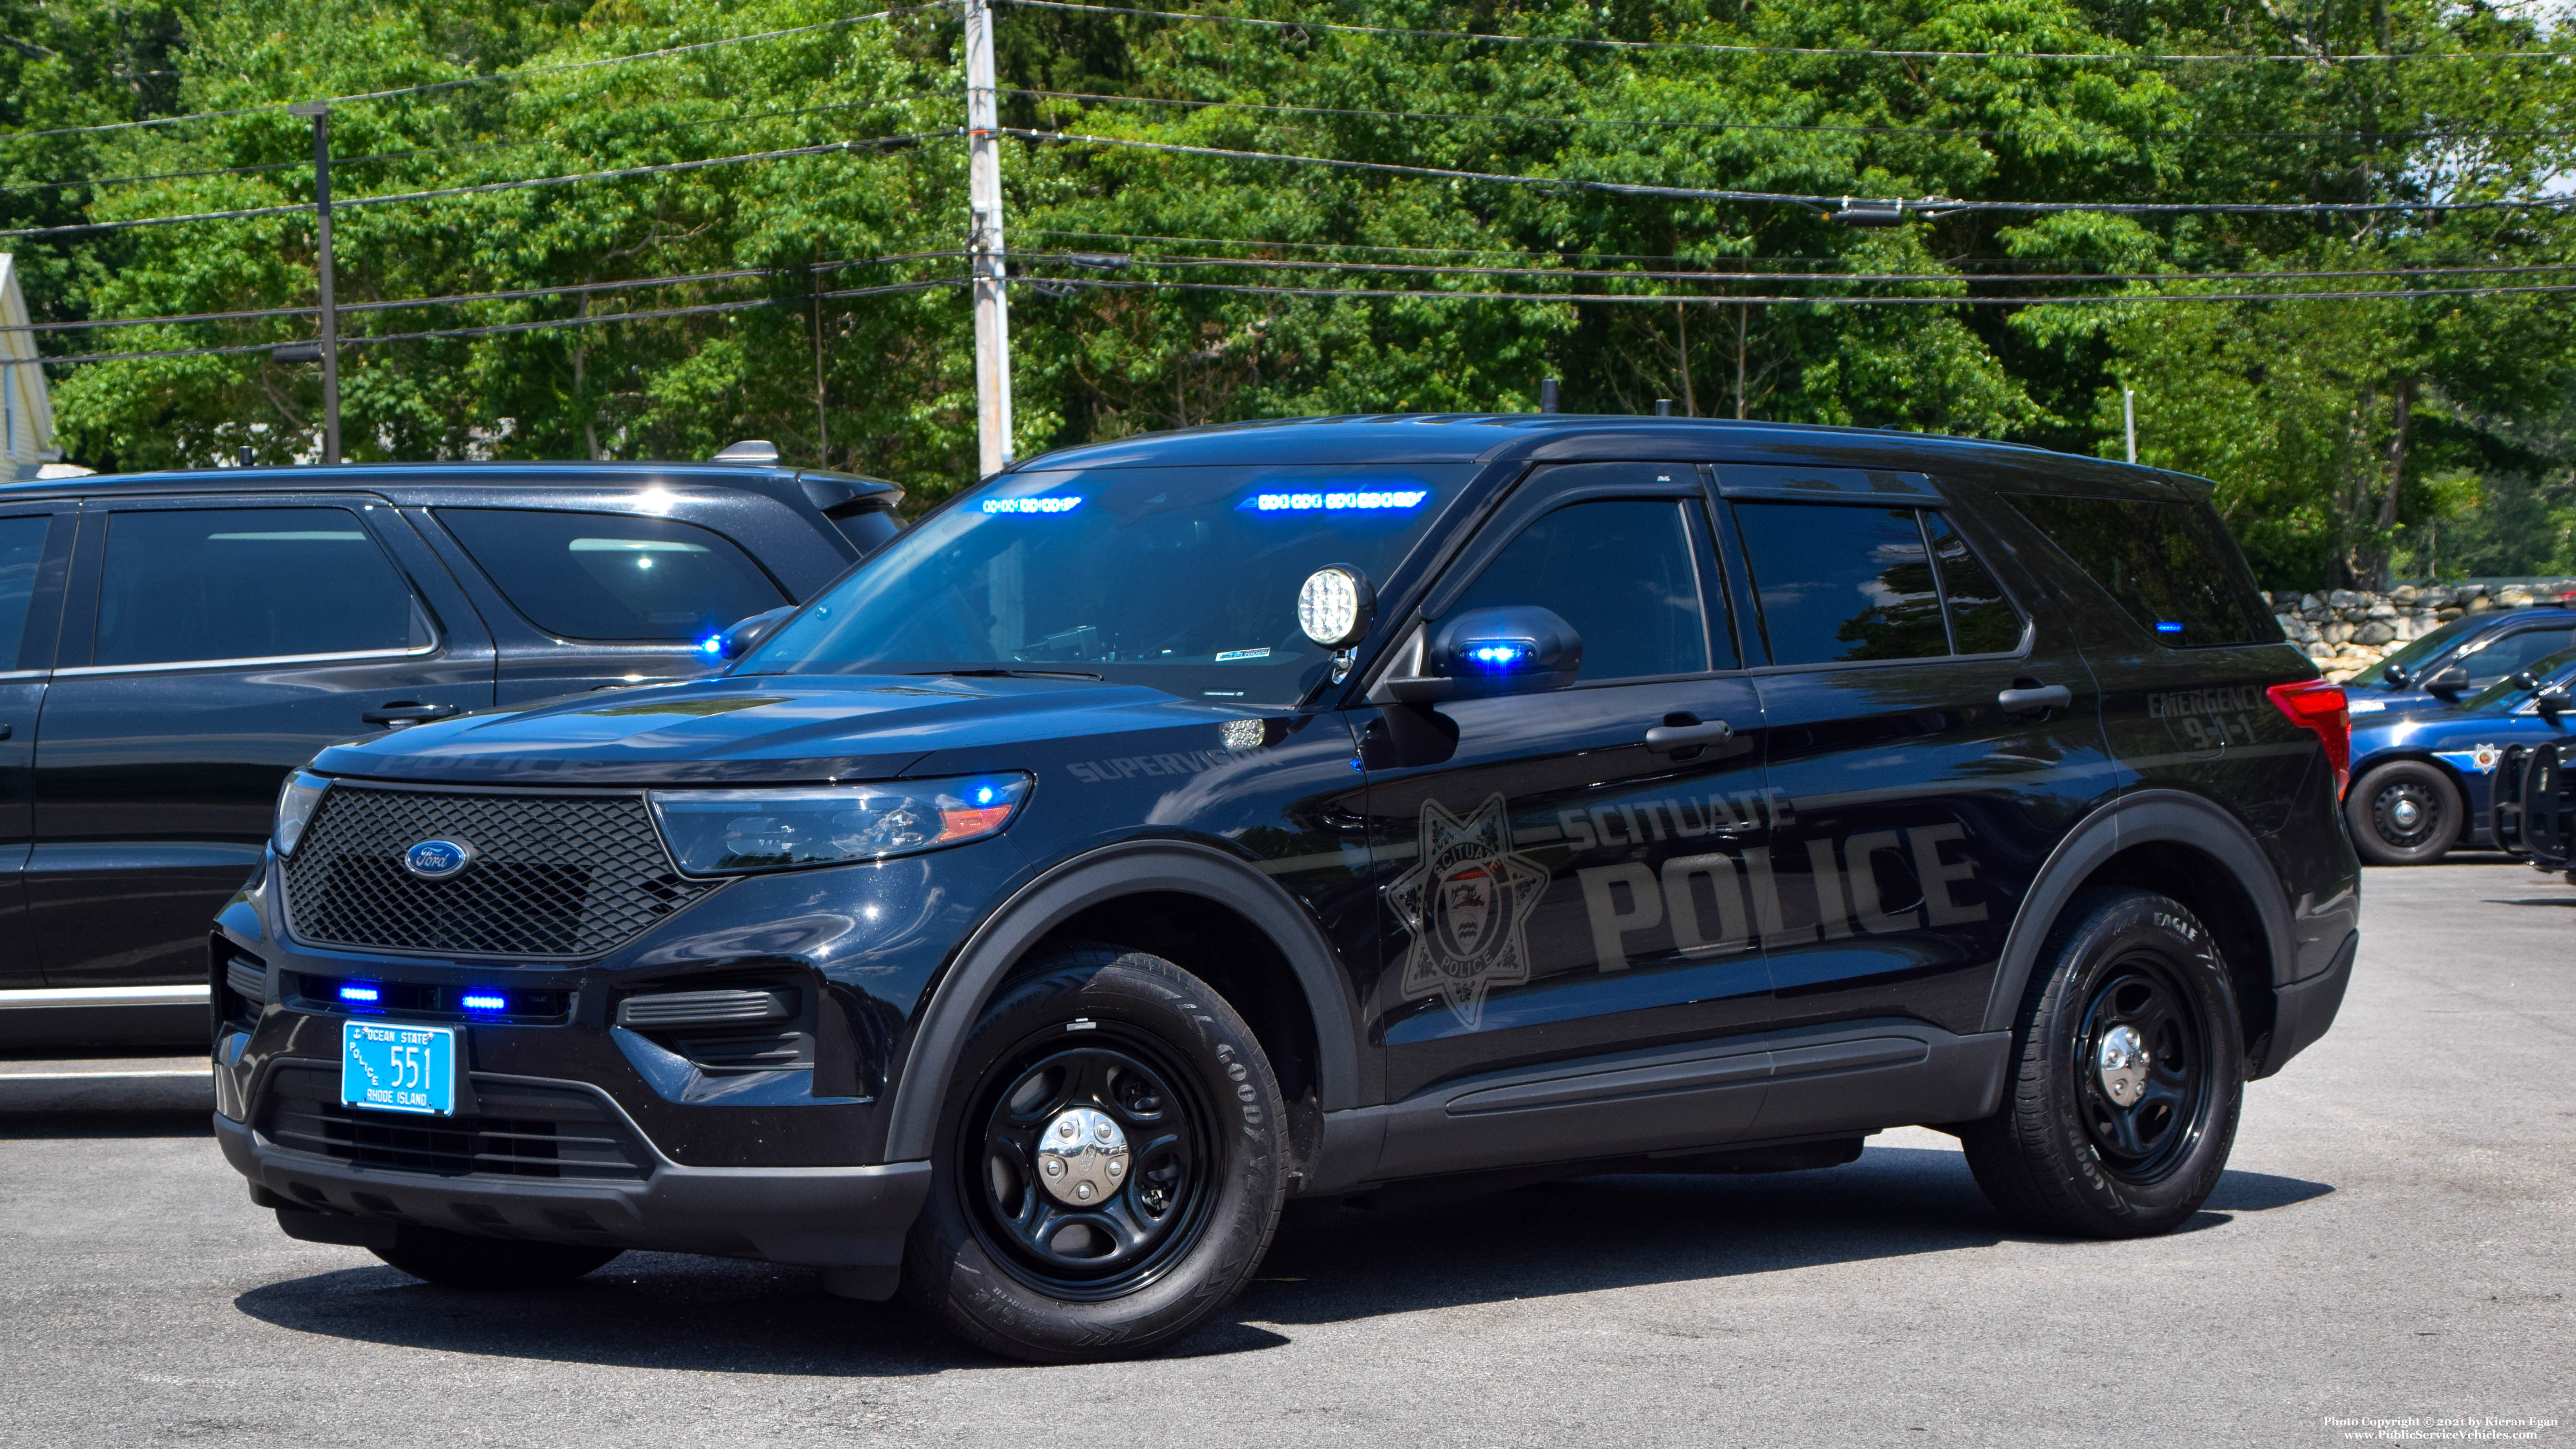 A photo  of Scituate Police
            Cruiser 551, a 2020 Ford Police Interceptor Utility             taken by Kieran Egan